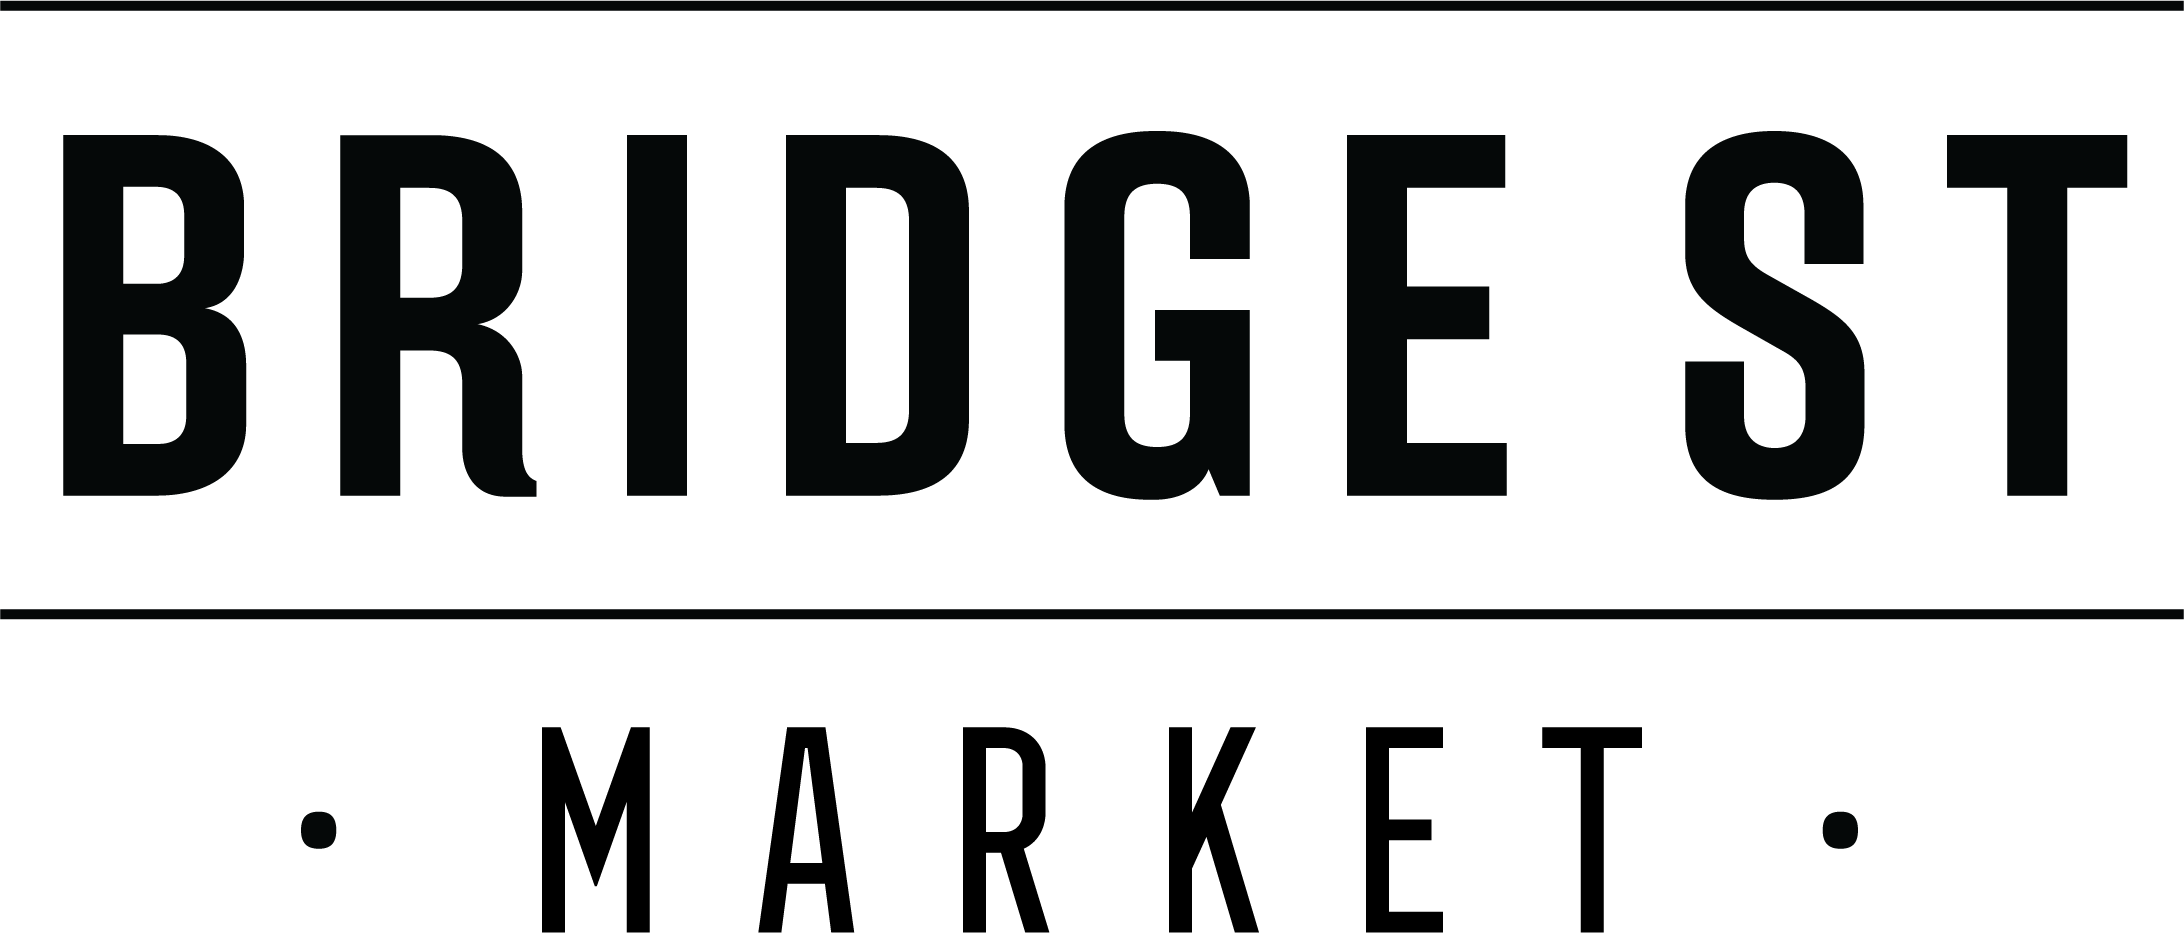 Copy of Bridge Street Market Logo.png